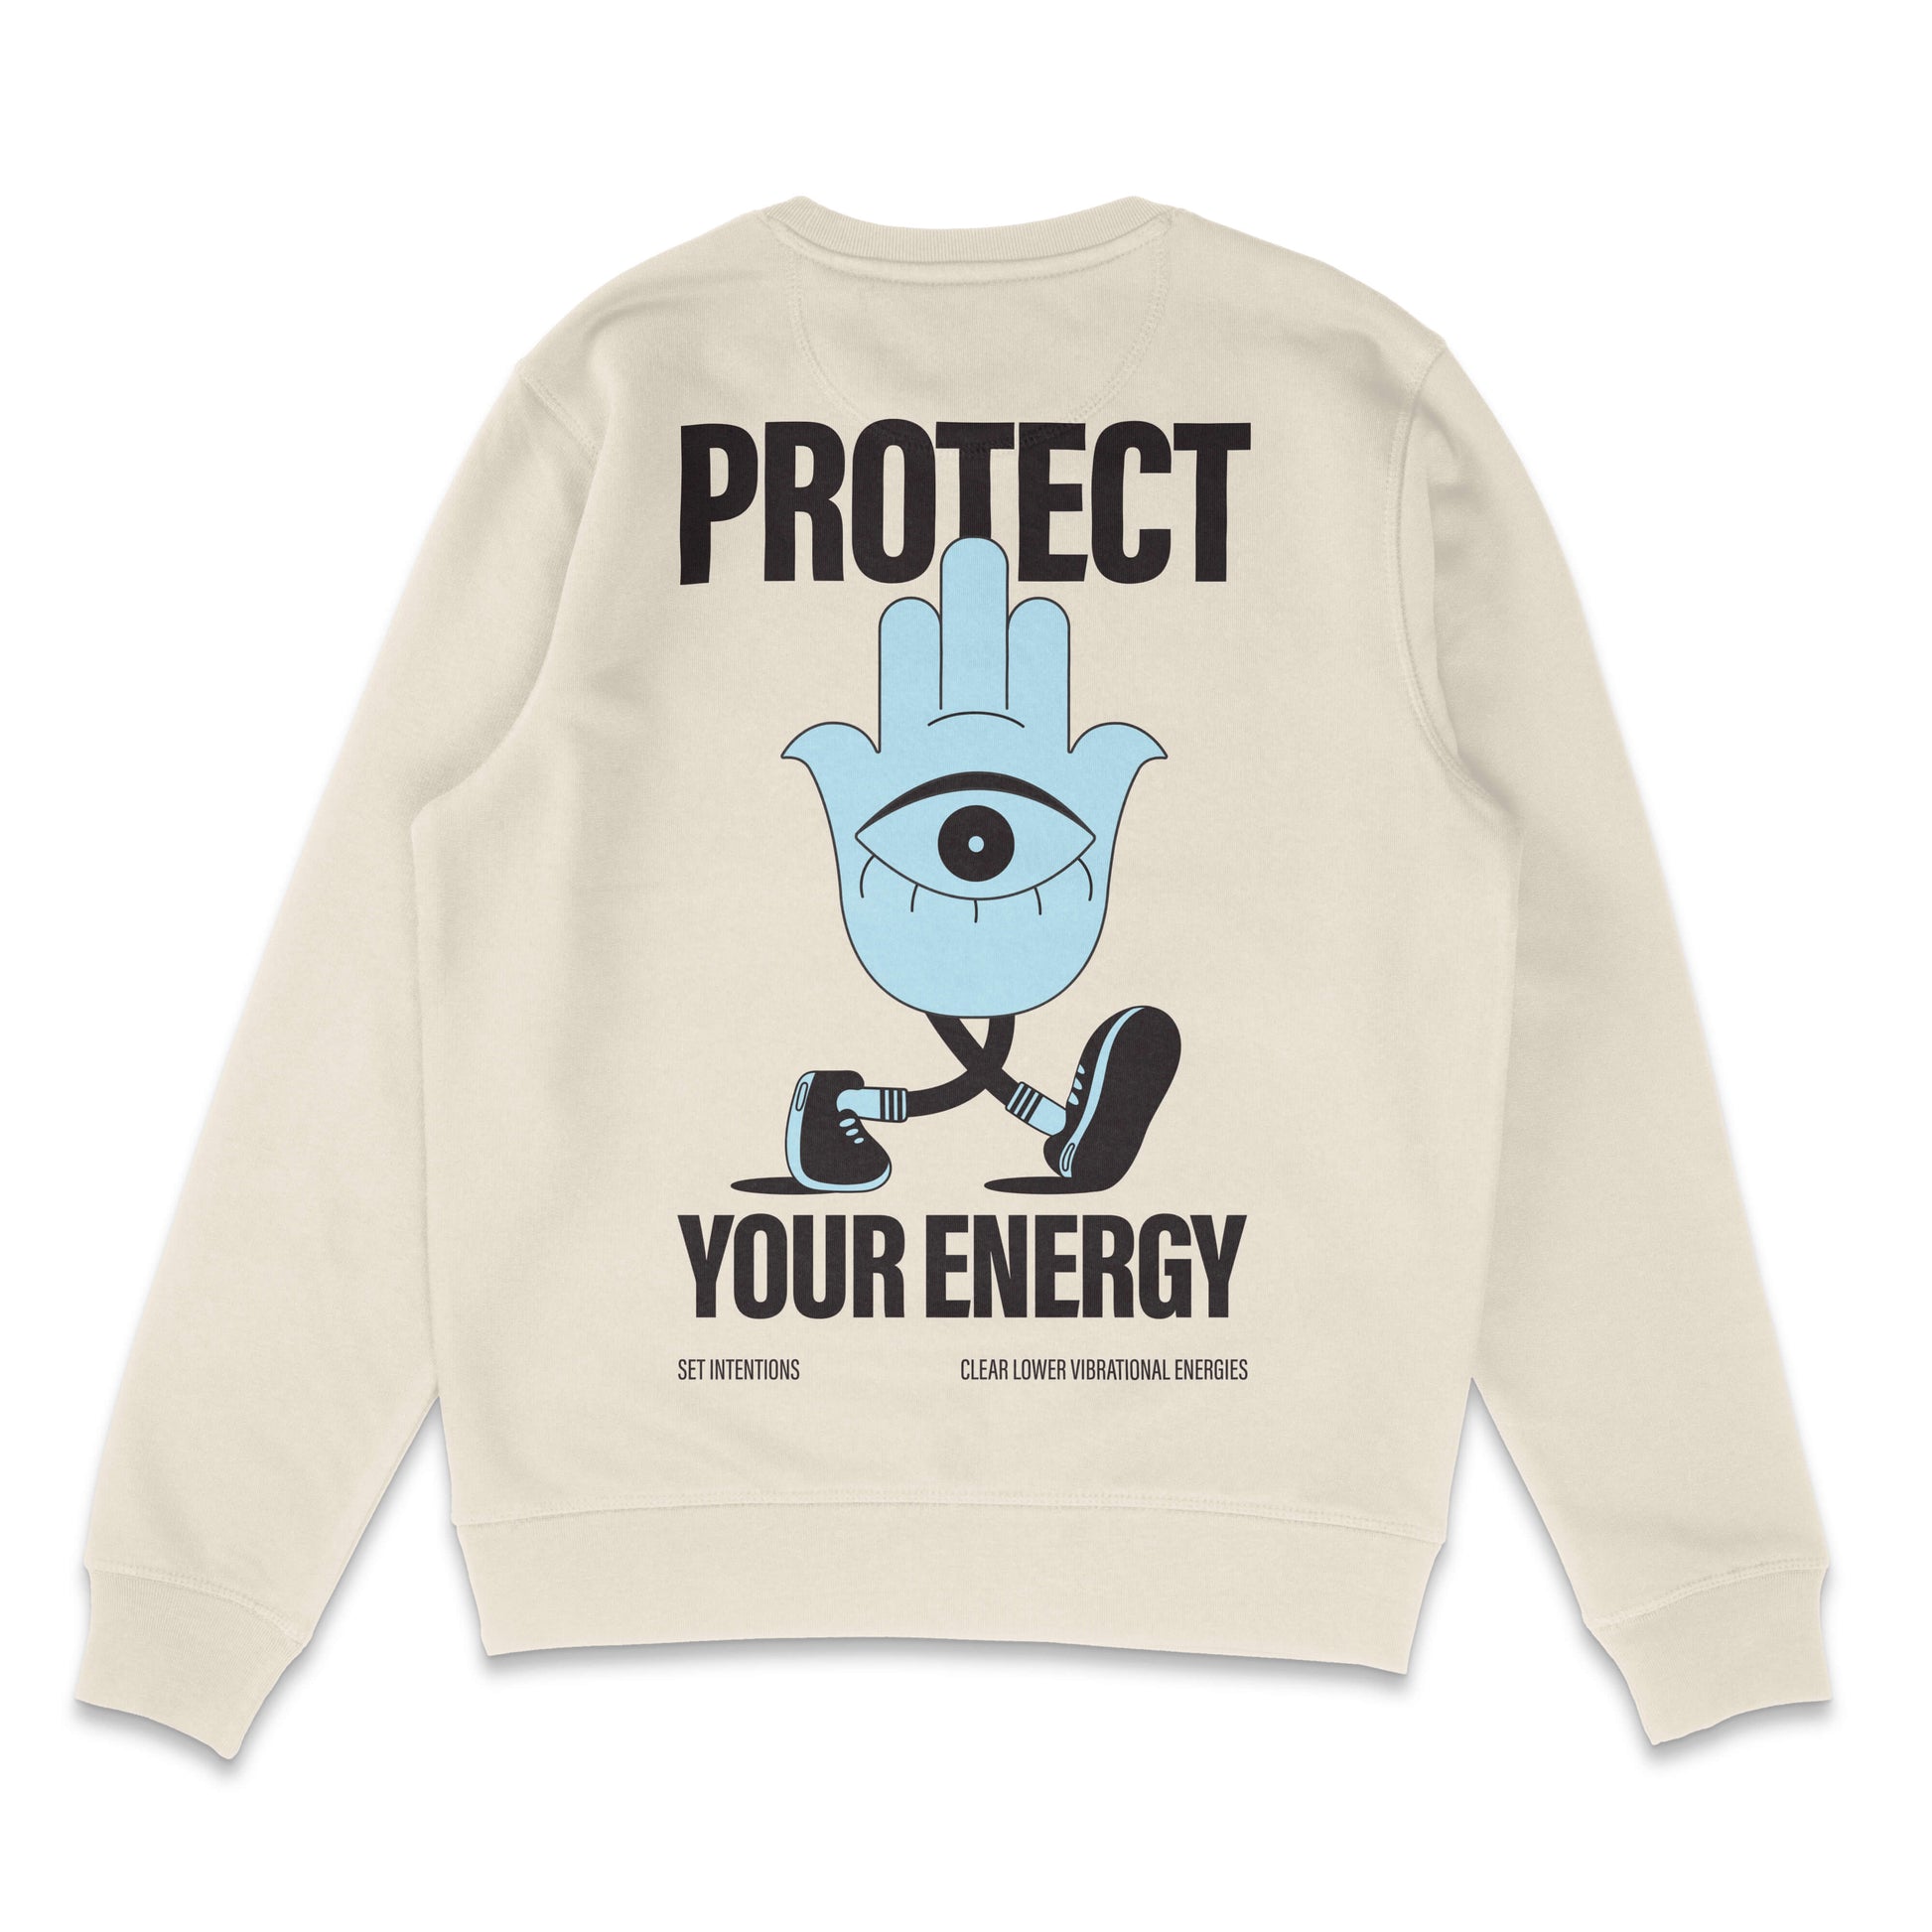 Protect your energy hamsa hand sweater